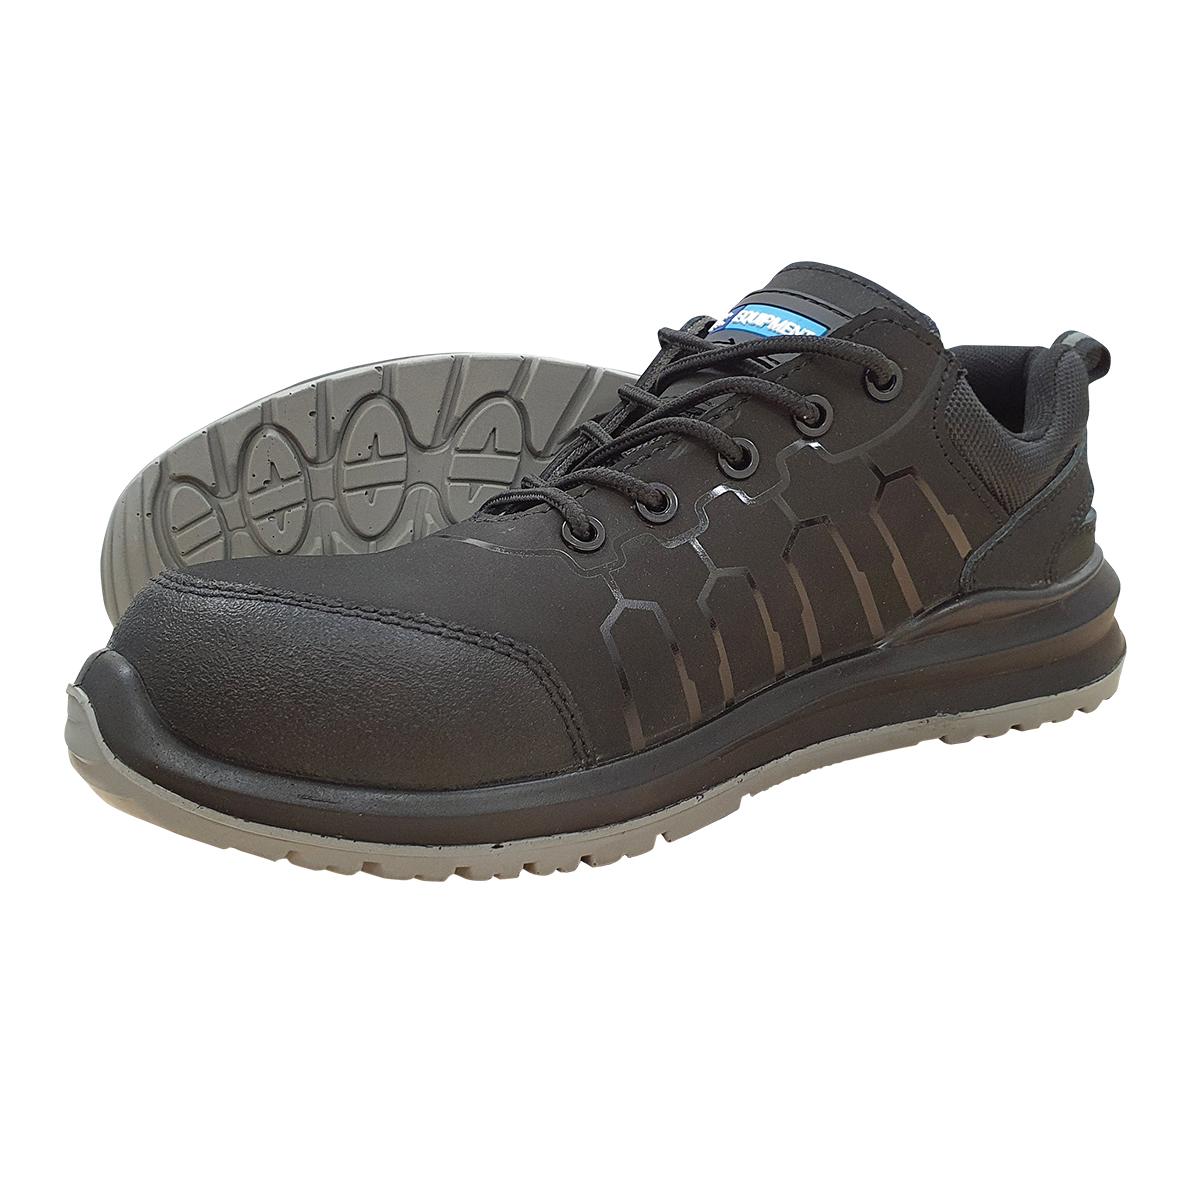 Pantofi protectie RTC, S3 ESD, Madeira, marime 46